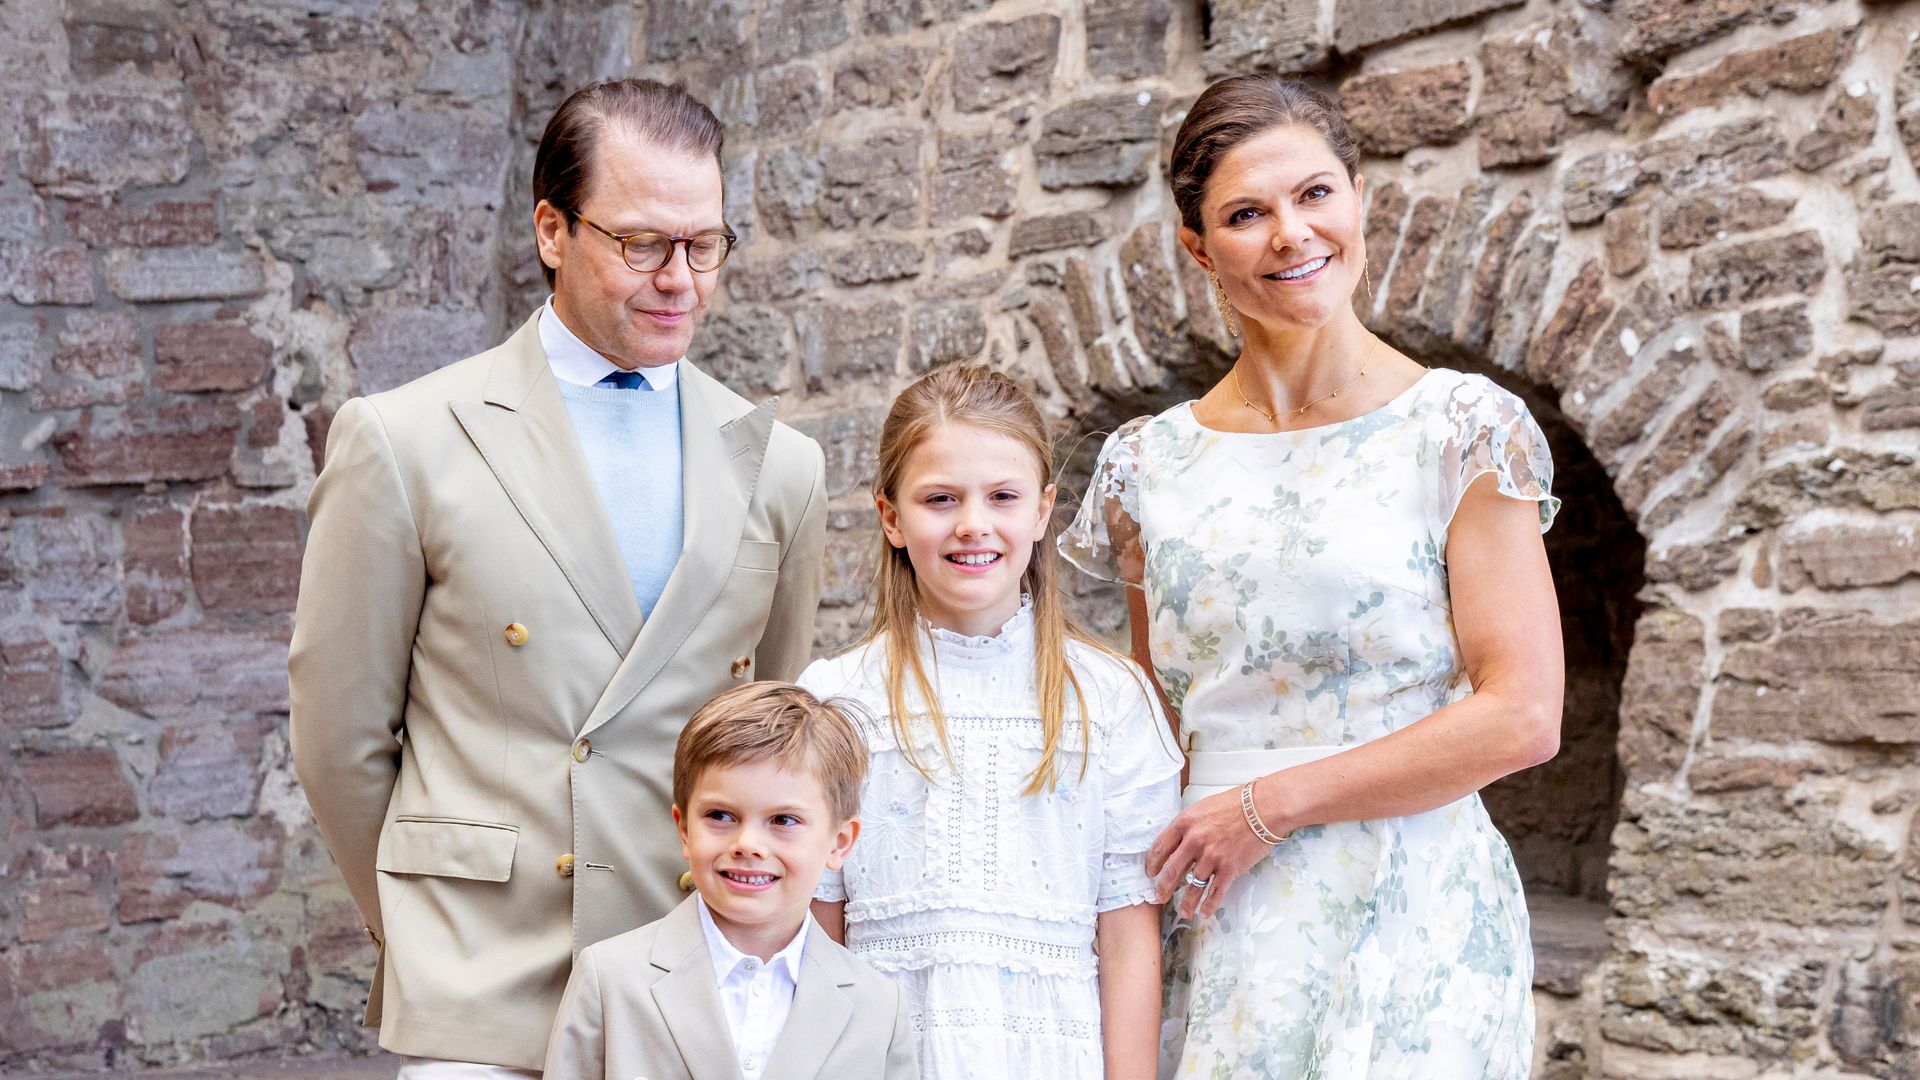 Princess Estelle and Prince Oscar of Sweden Look So Grown Up